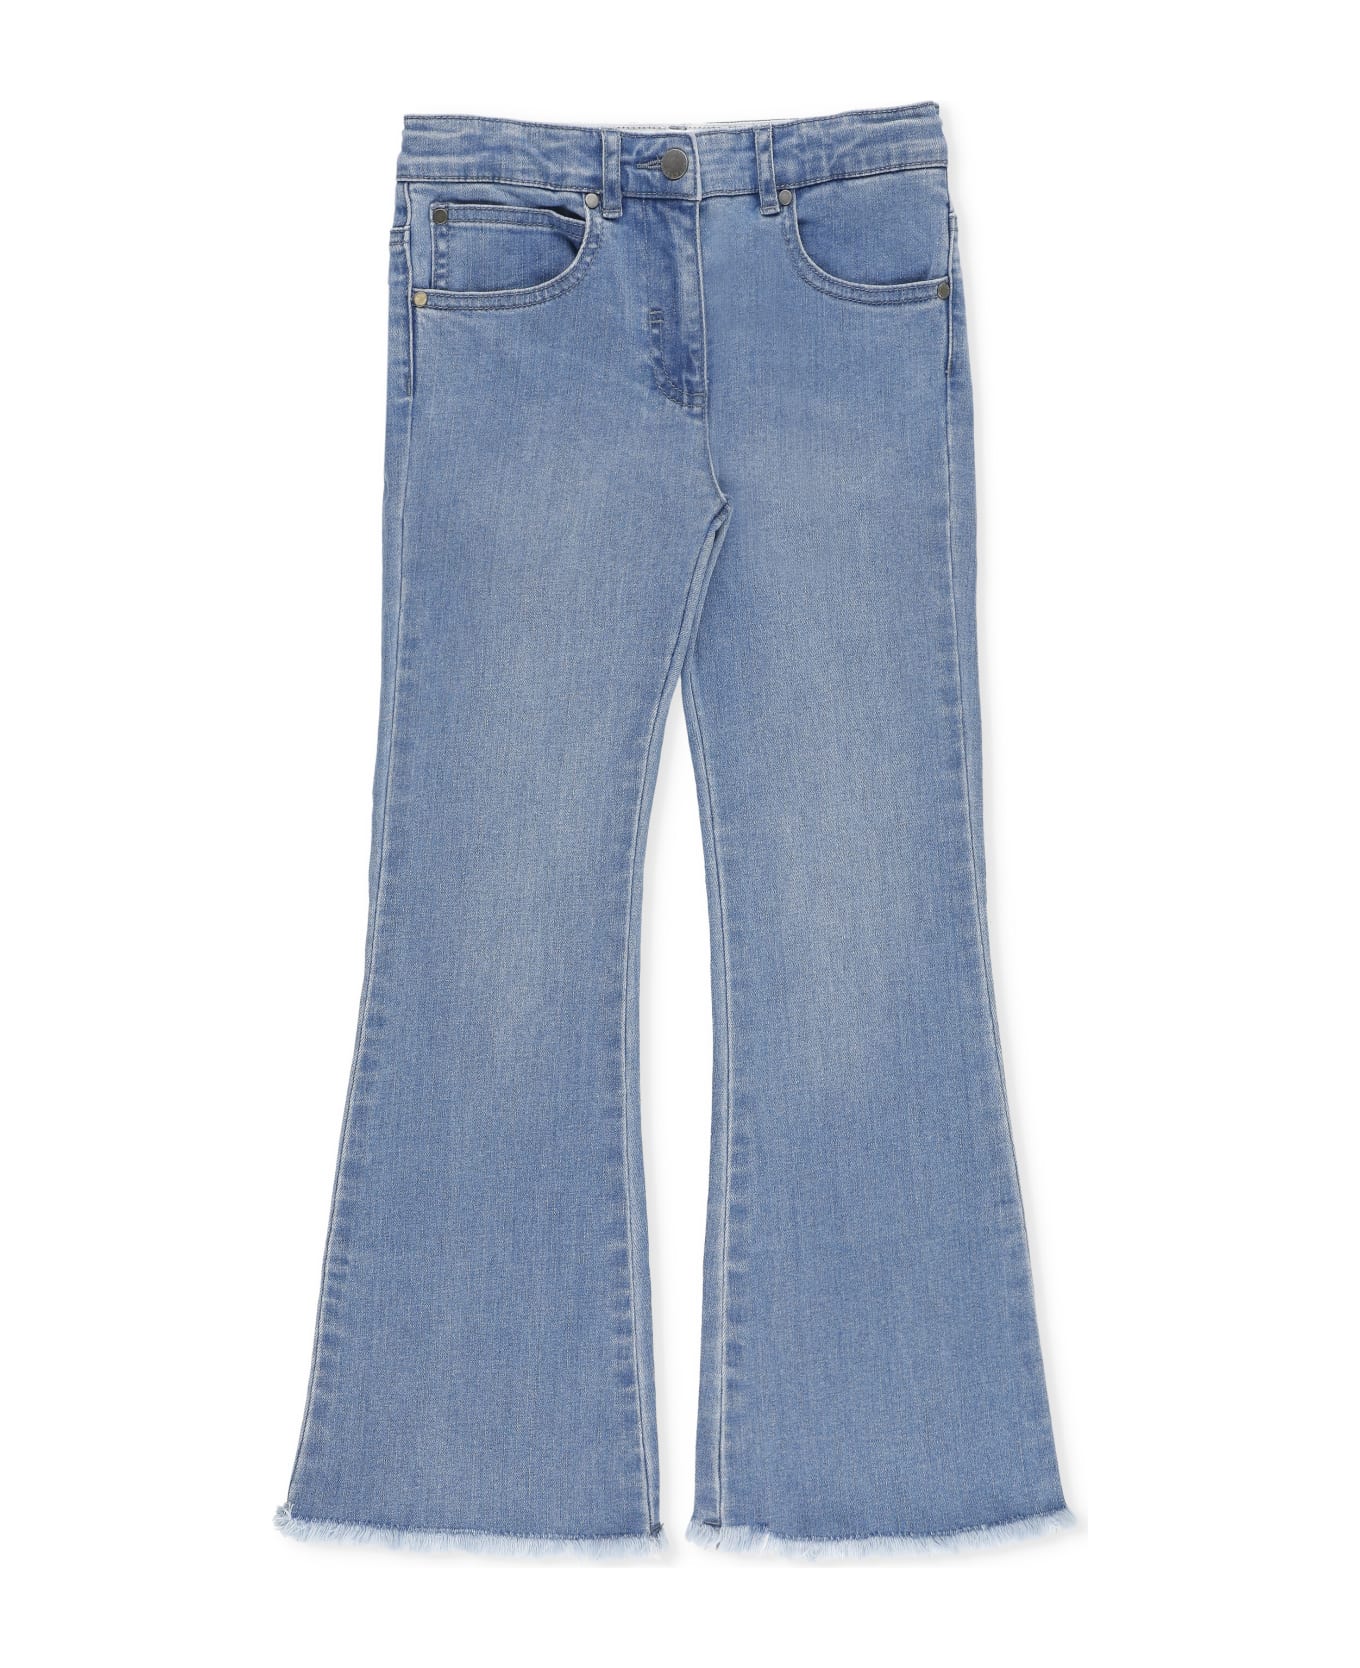 Stella McCartney Cotton Jeans - Light Blue